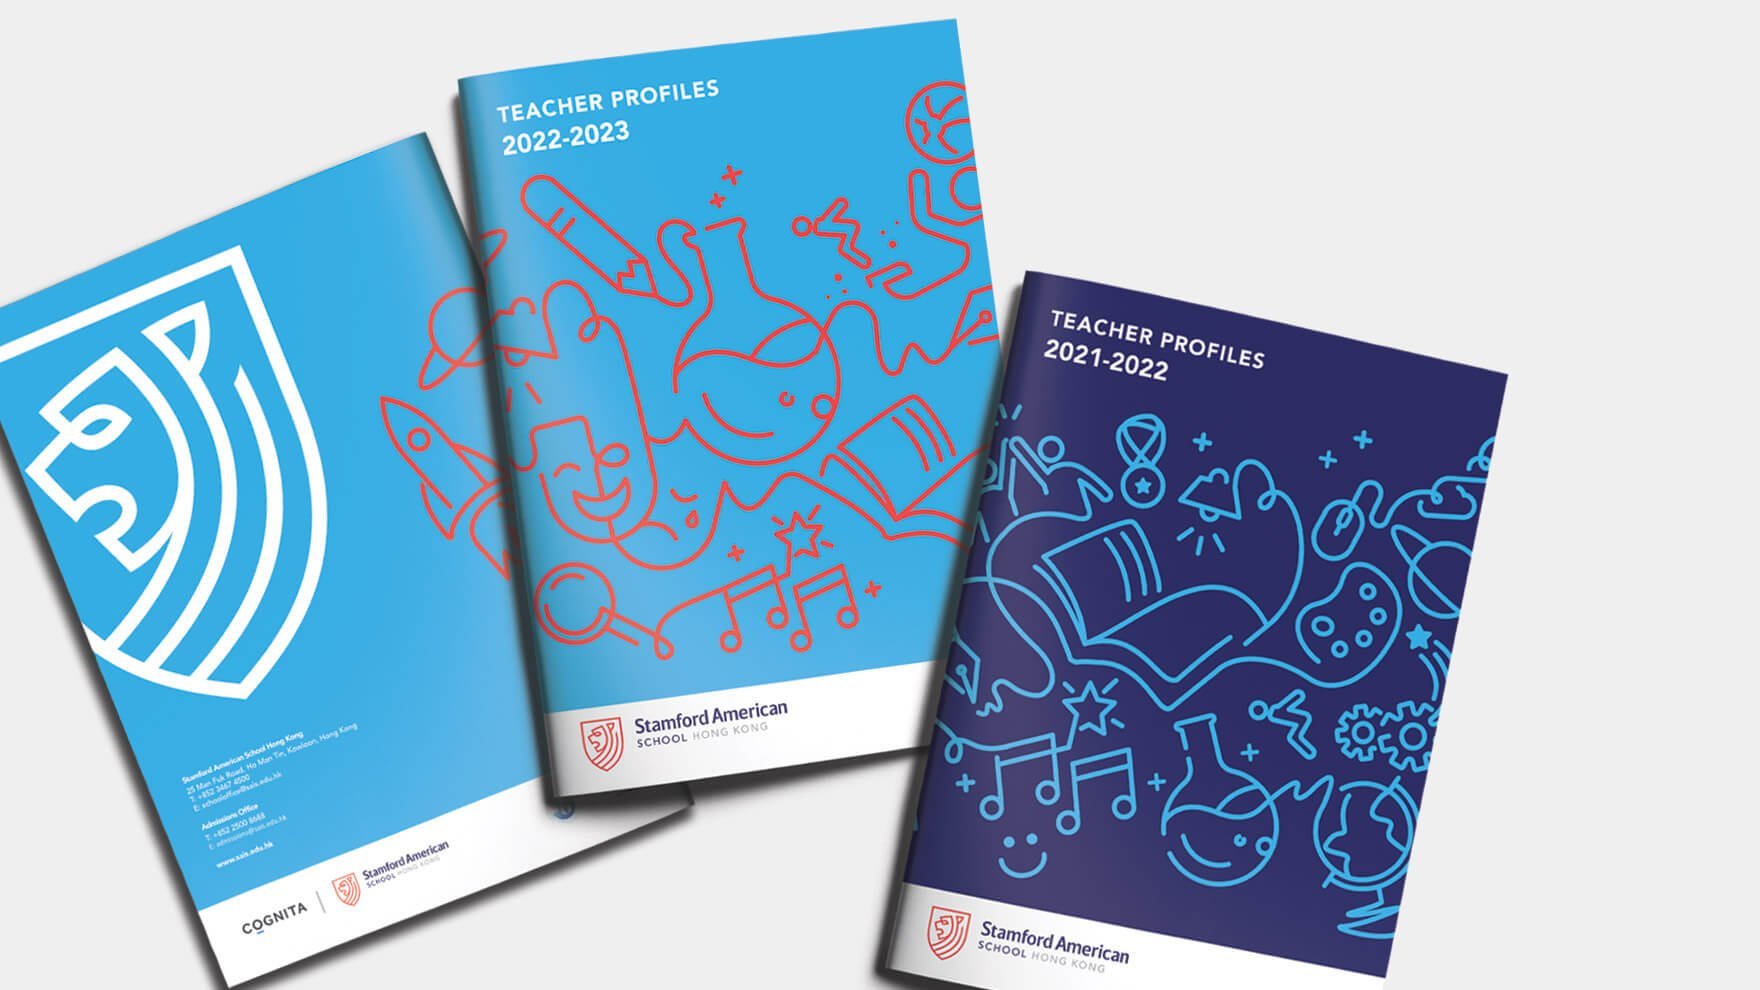 Branding Agency Hong Kong_SAIS_Teacher Profiles Handbook Design_Cheddar Media_1760_1